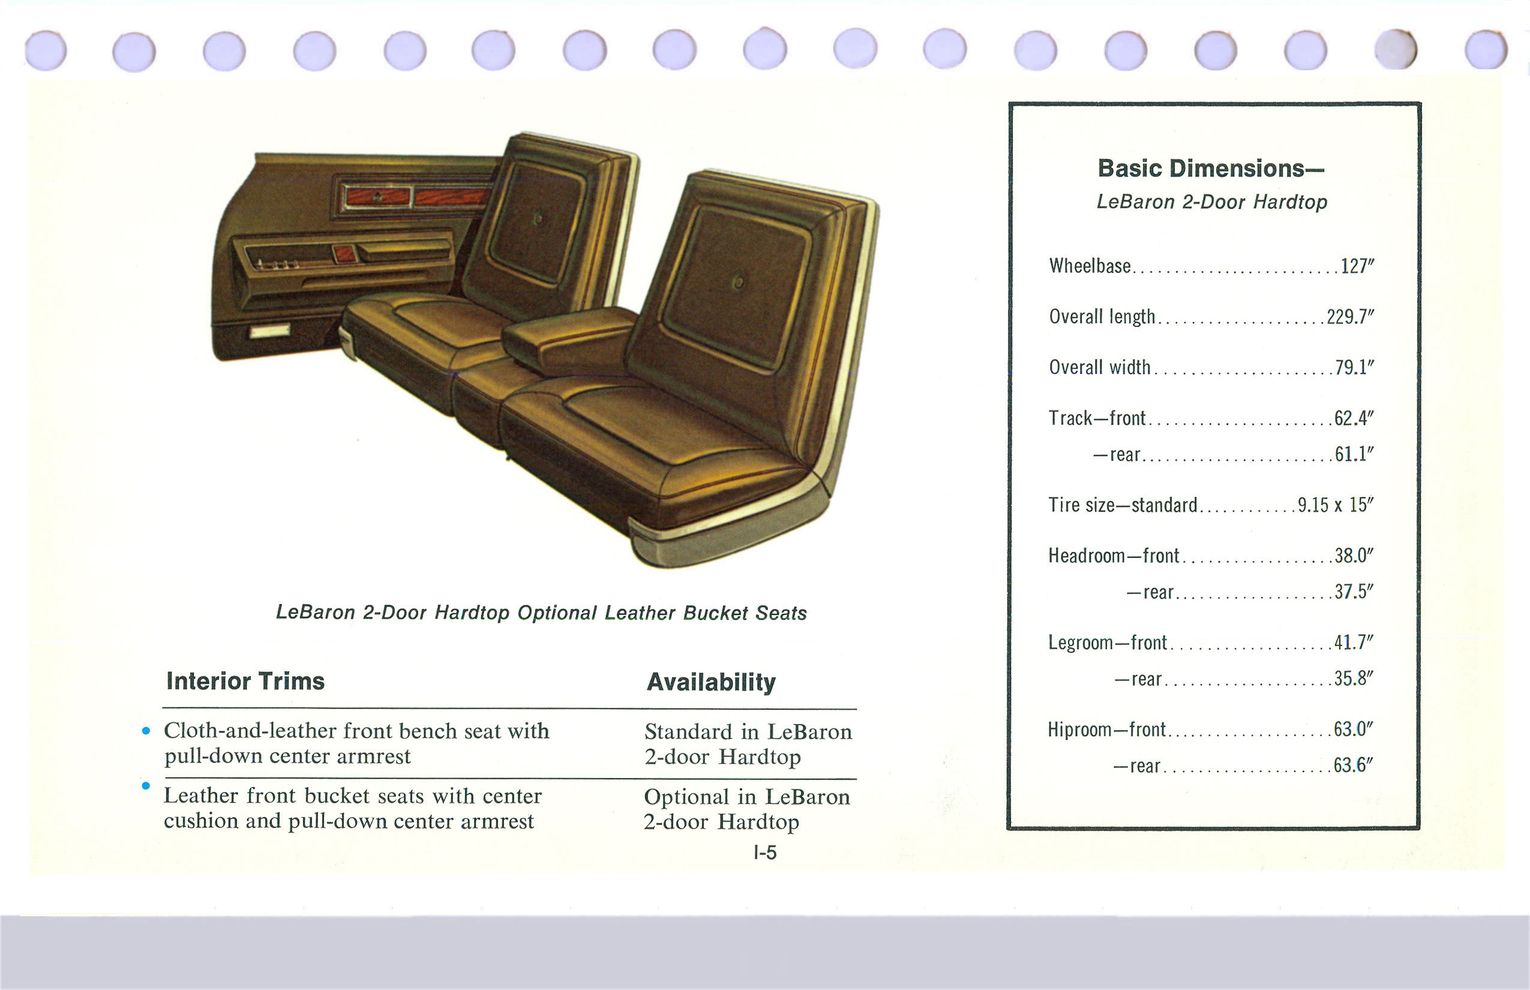 1969 Chrysler Data Book-II05